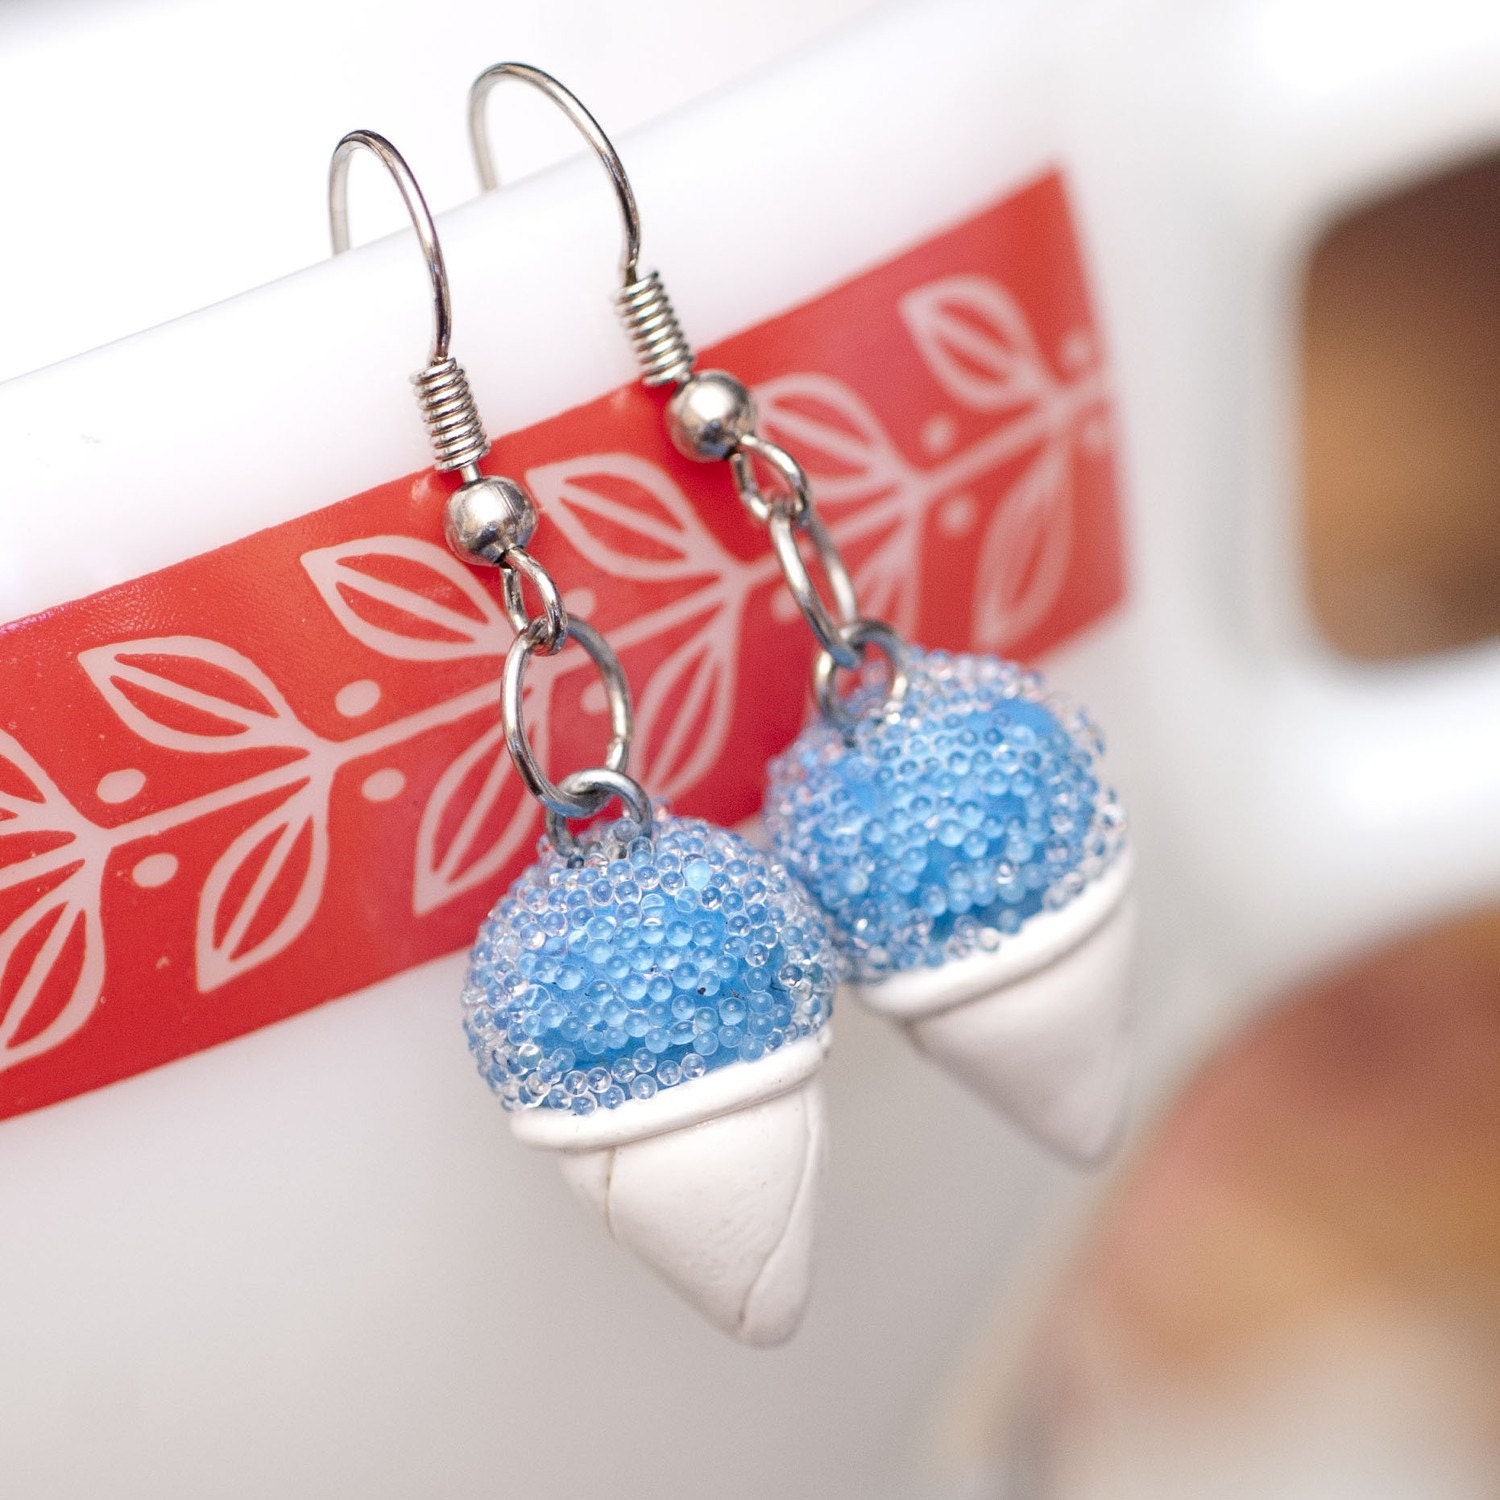 Roscata Blueberry Snow Cone Earrings Handmade Polymer Clay Food Miniature Art Jewelry